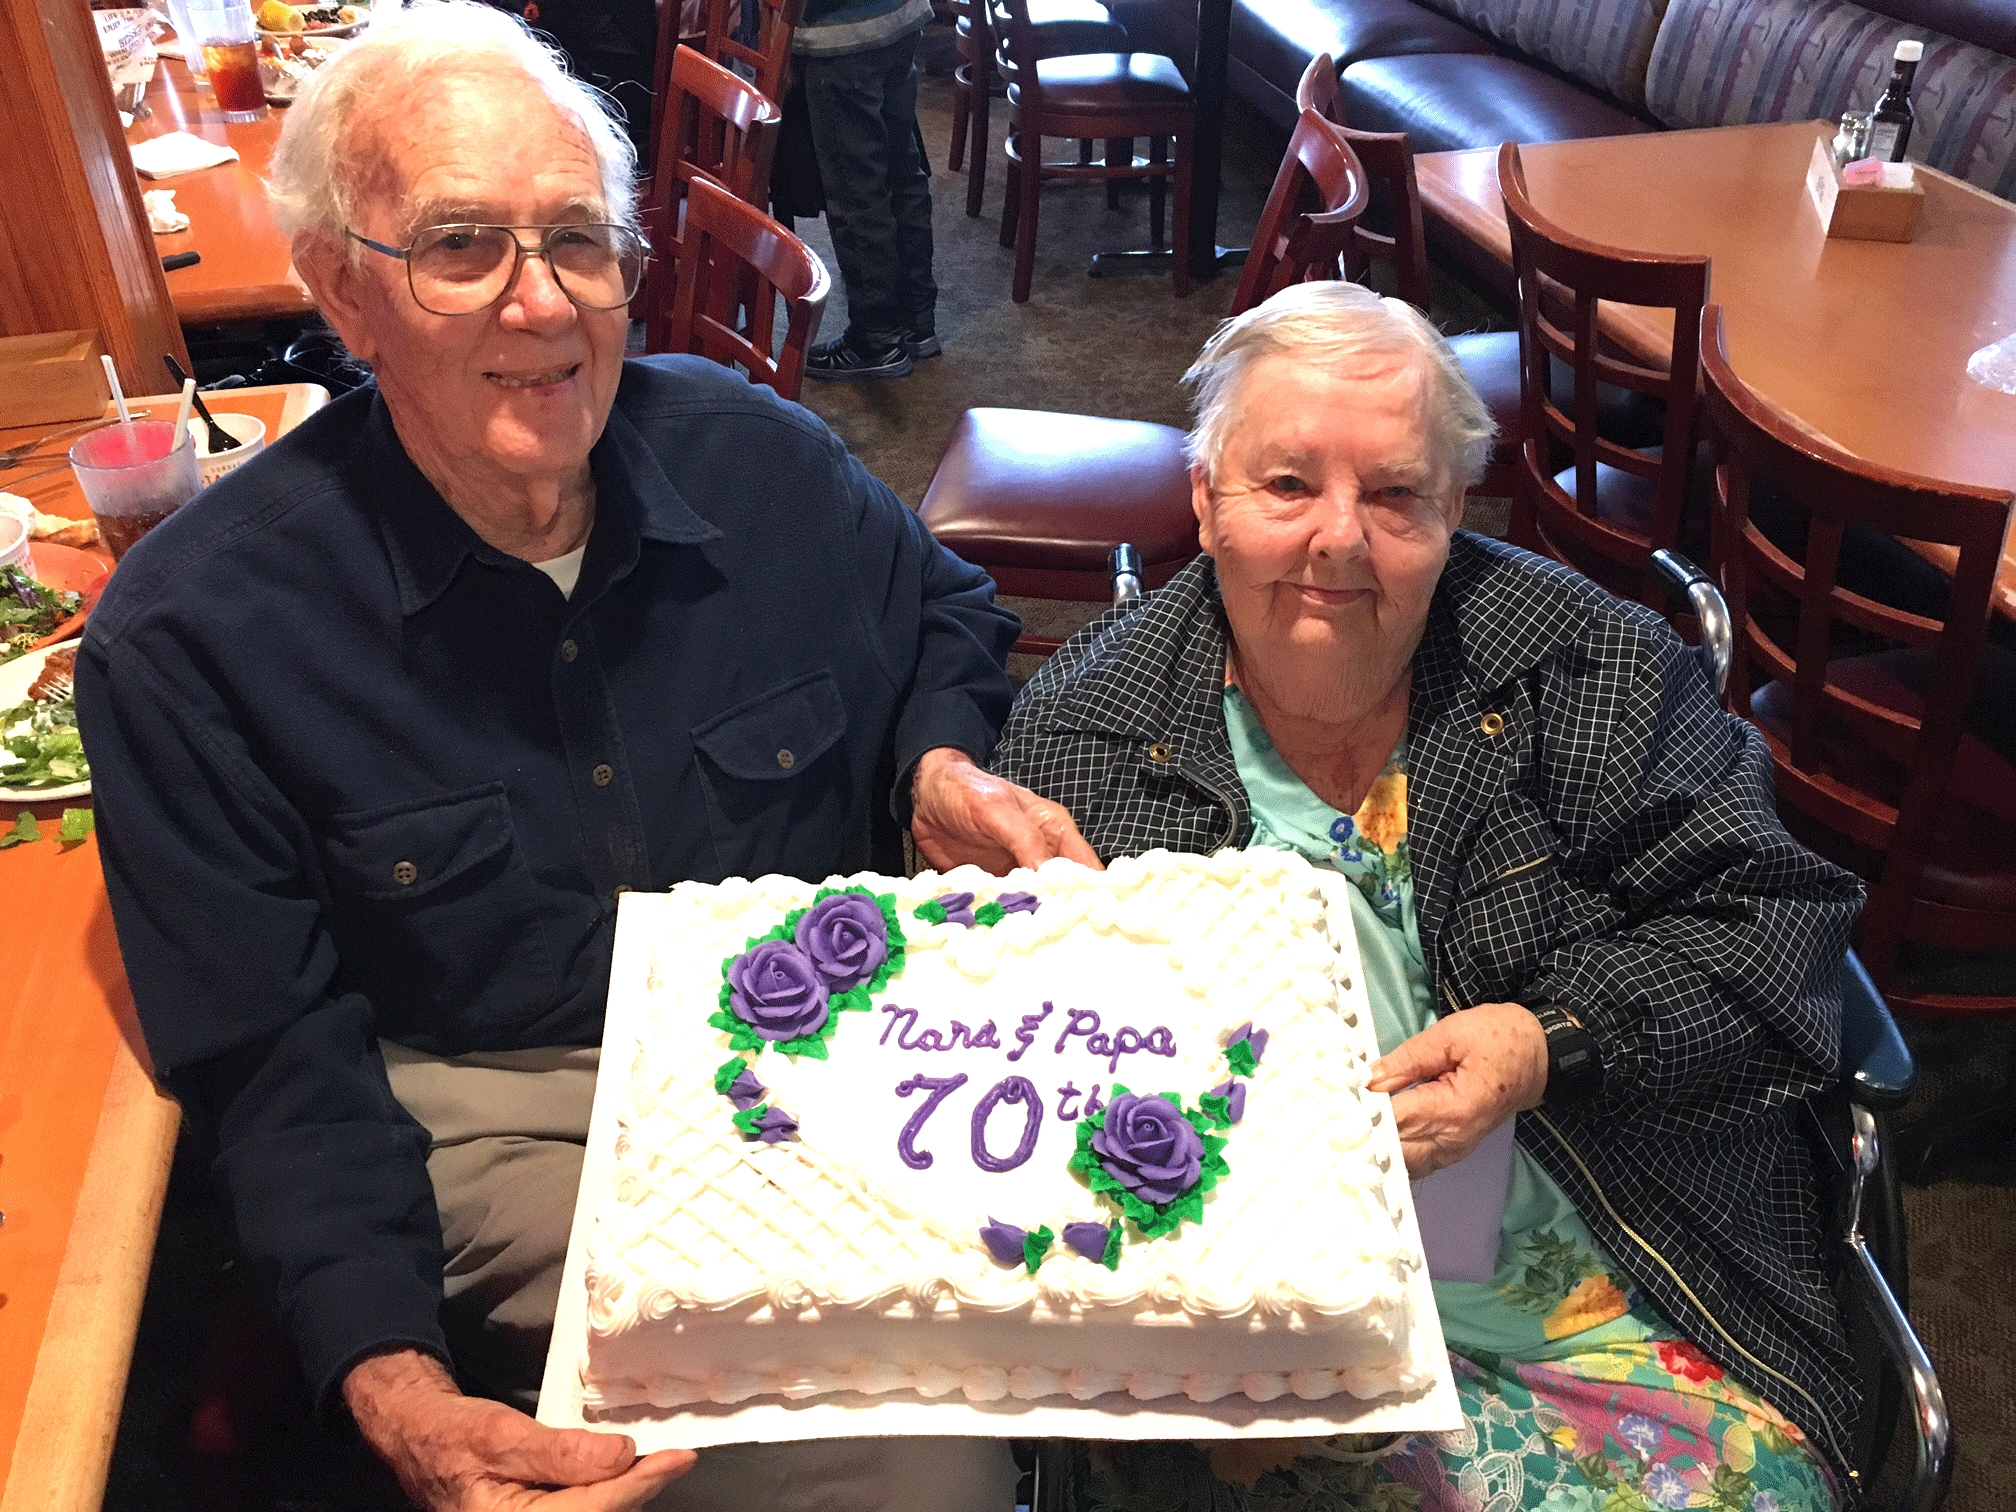 Whitworth’s celebrate 70th wedding anniversary